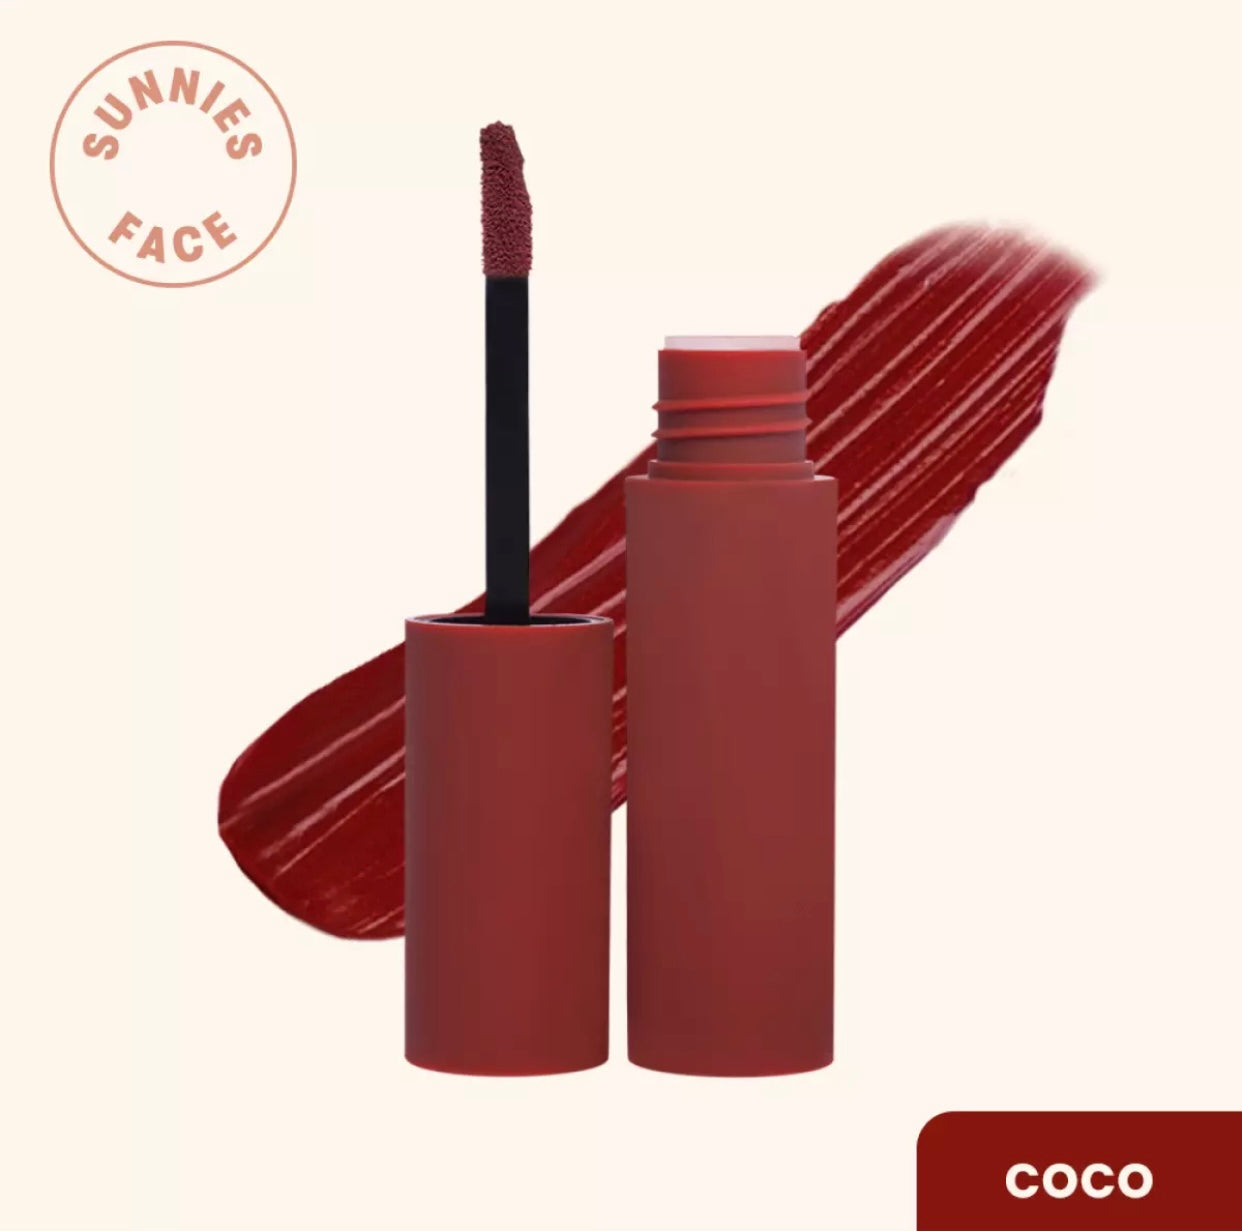 Sunnies Face Lip Dip | Whipped Matte Liquid Lipstick ( COCO )